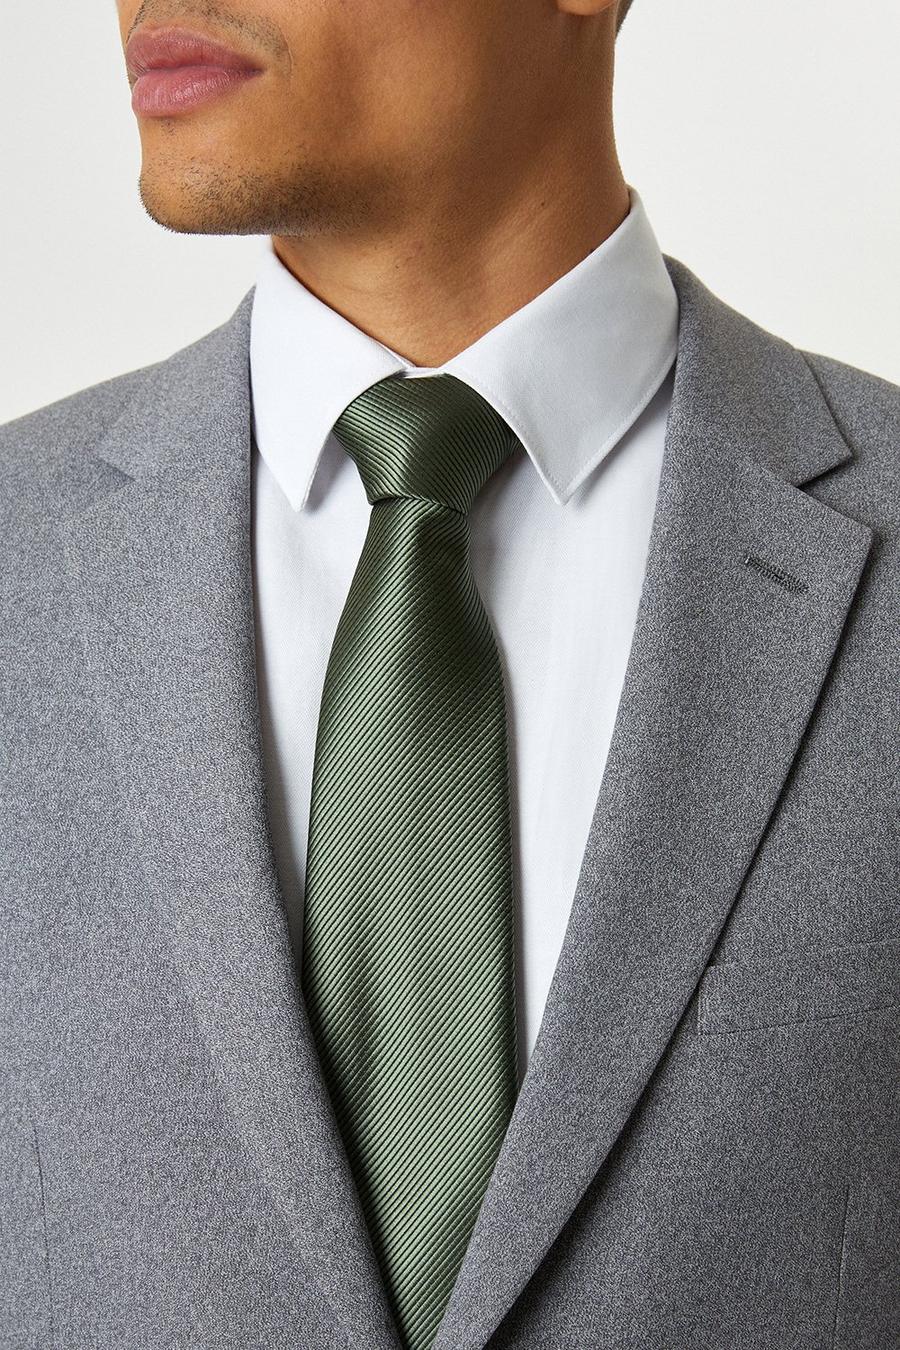 Regular Khaki Twill Tie